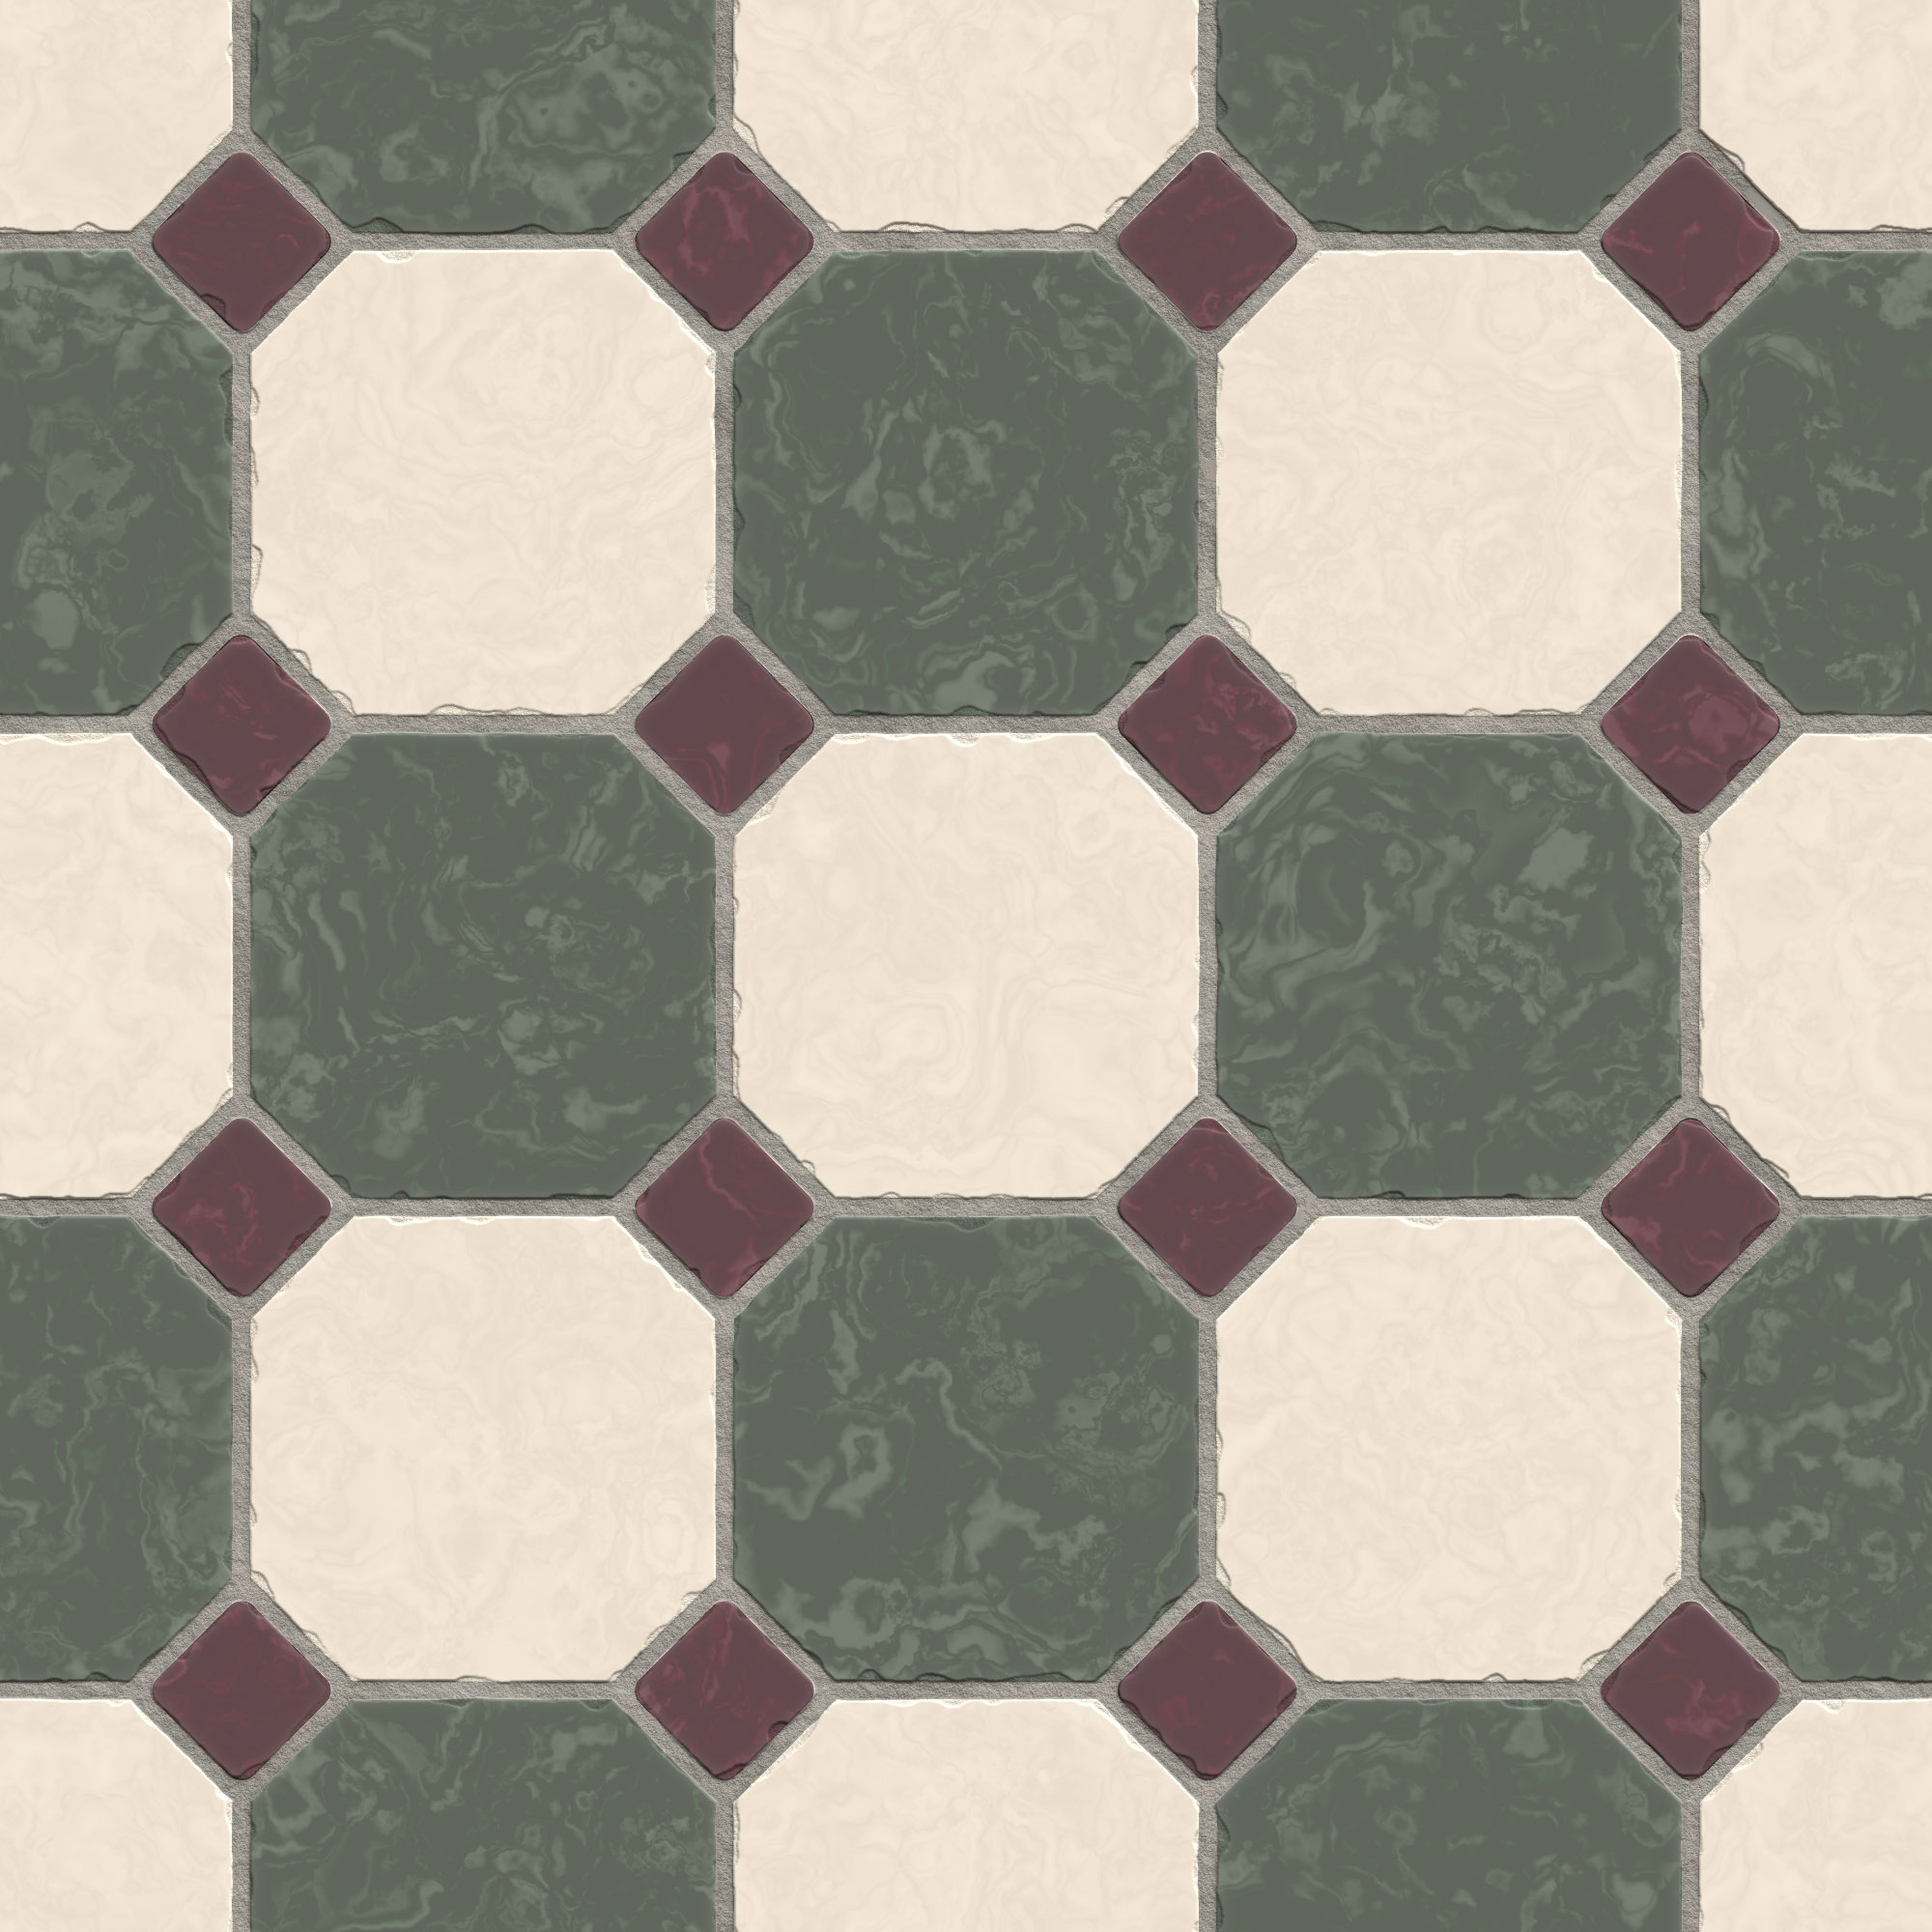 ceramic tiles texture seamless